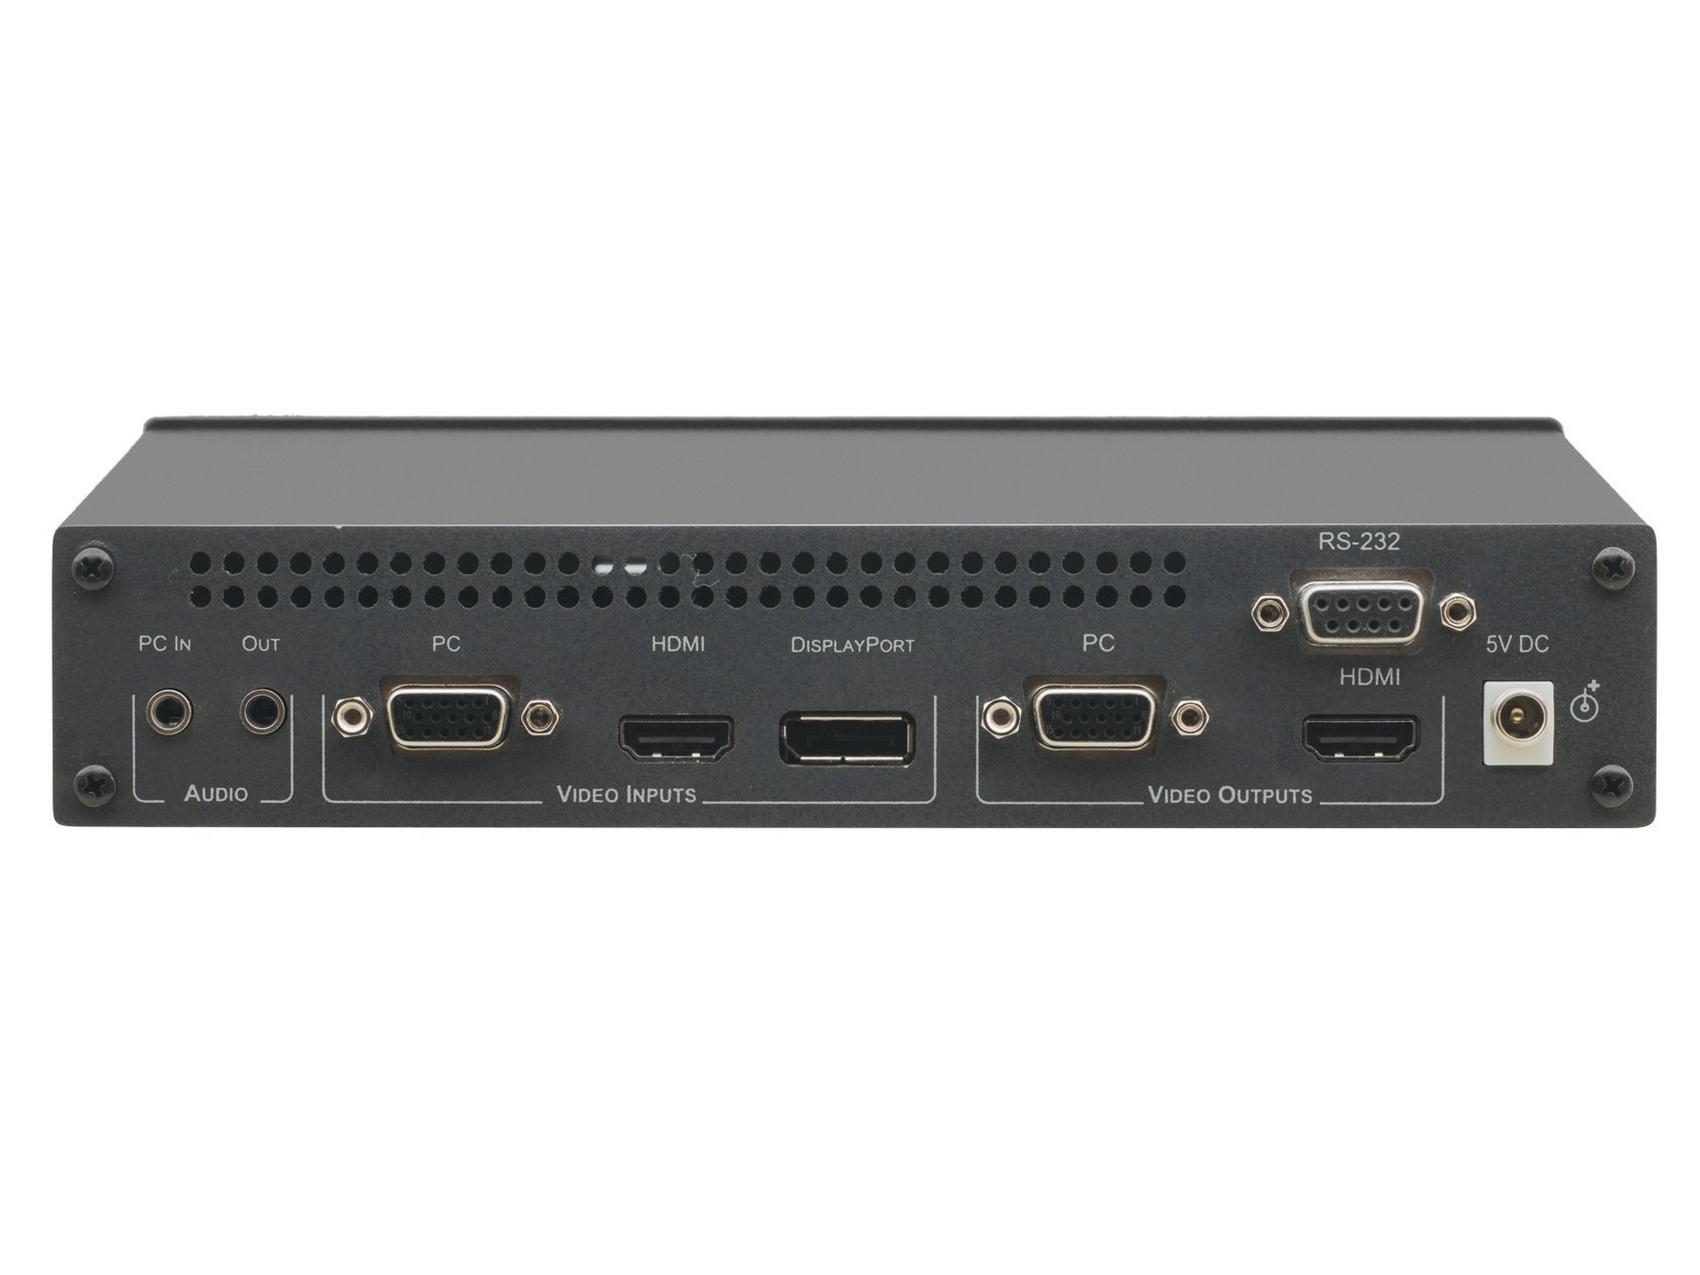 VP-461 3 Input Analog/HDMI ProScale Presentation Switcher/Scaler by Kramer